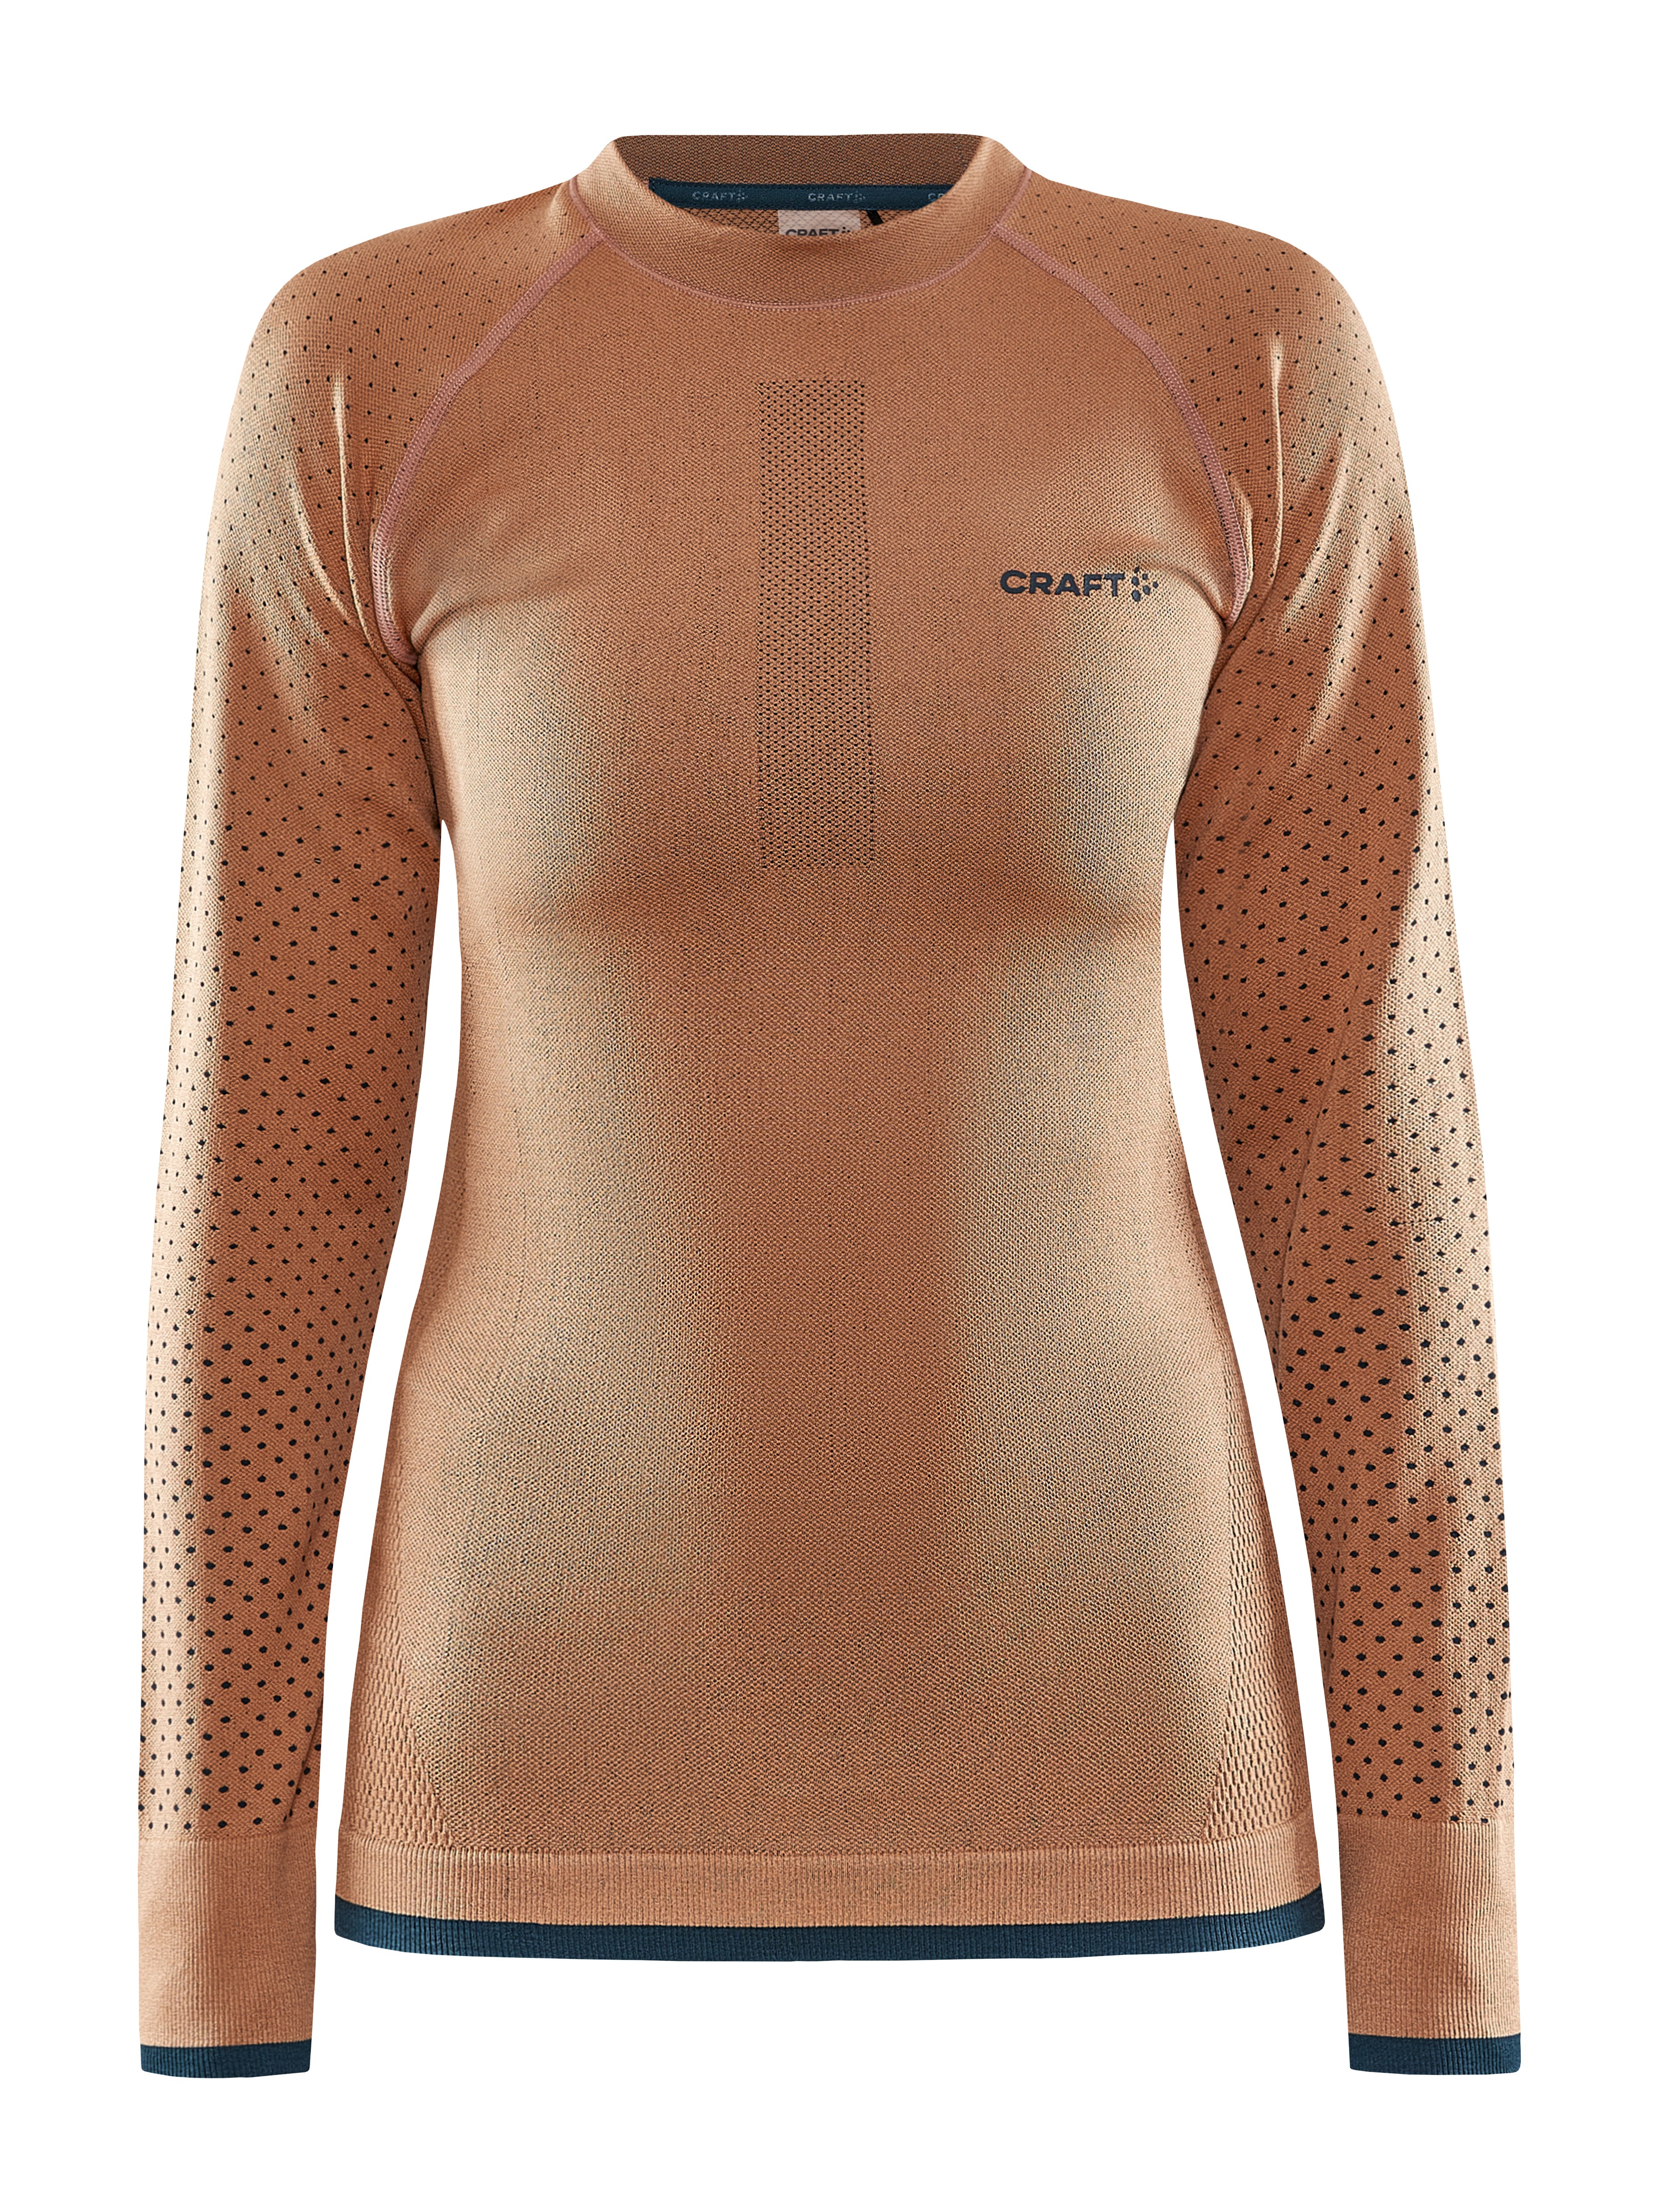 ADV - LS Craft Sportswear Orange Intensity Warm W |